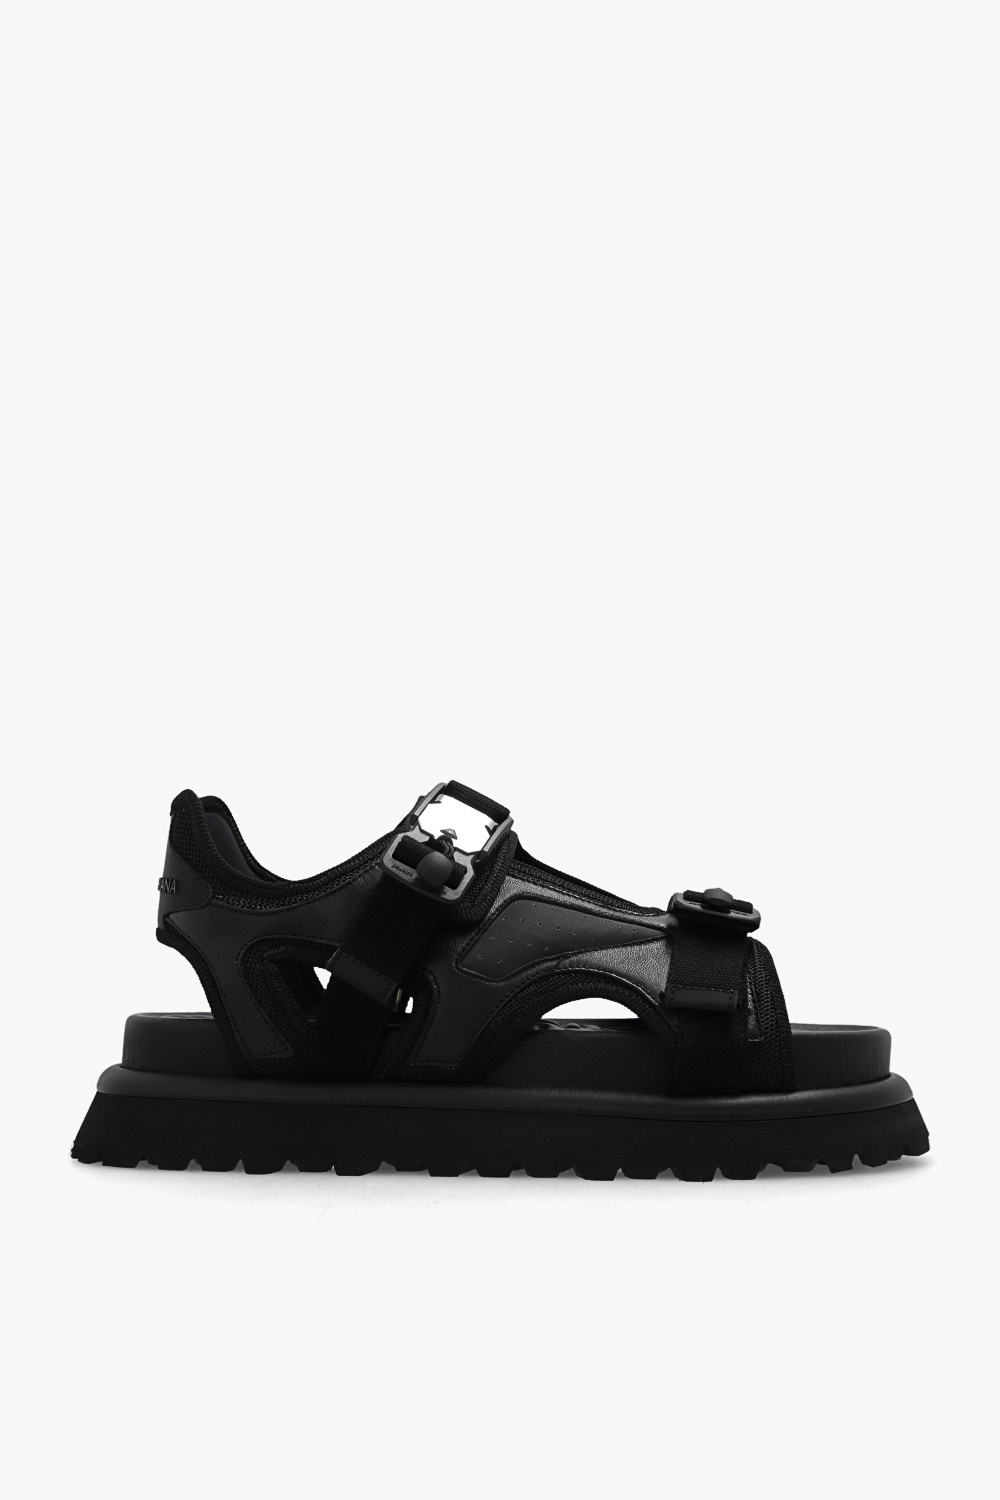 Dolce & Gabbana Fuchsia Wool Turtleneck Platform sandals